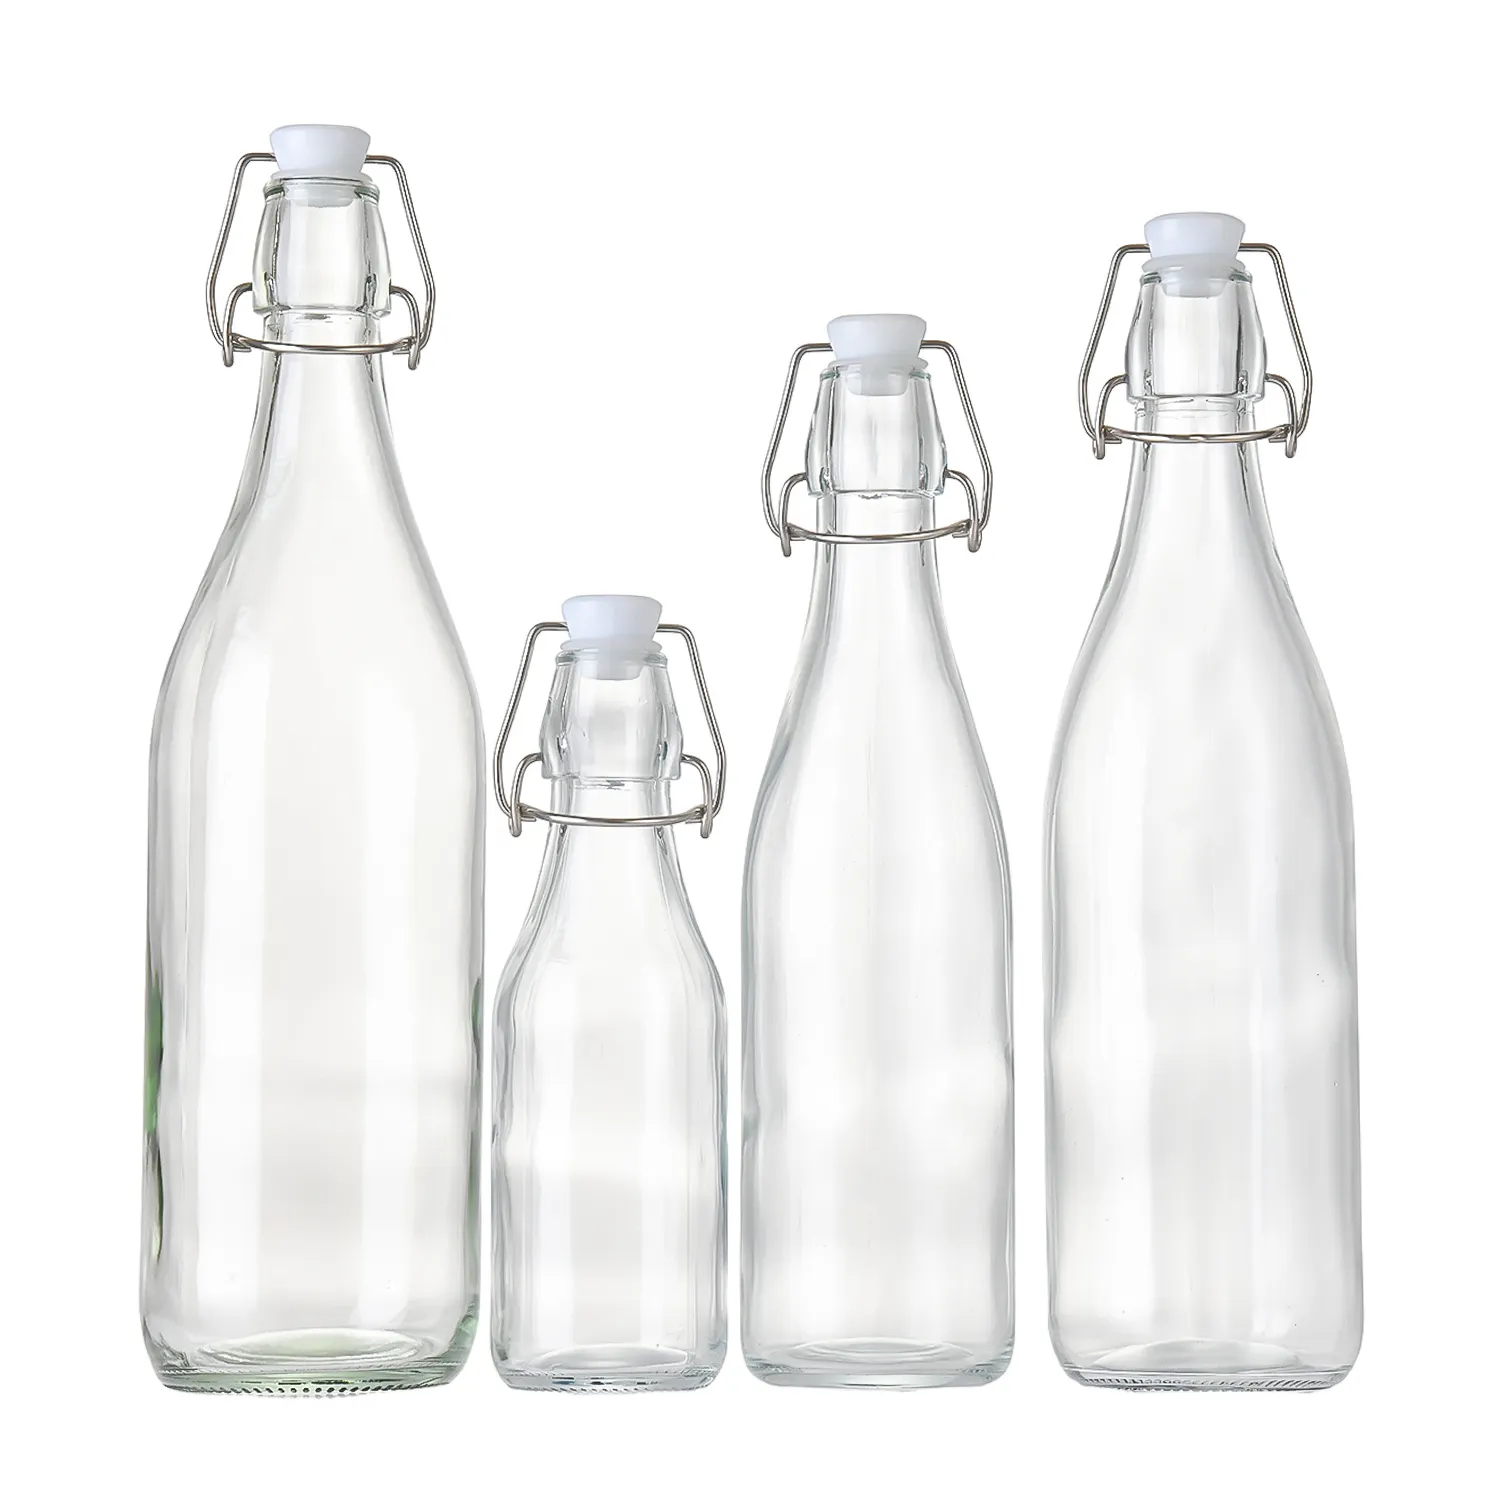 The New Listing 250ml 500ml Flip Top Glass Juice Bottle 1 Liter Glass Bottle Manufacturers